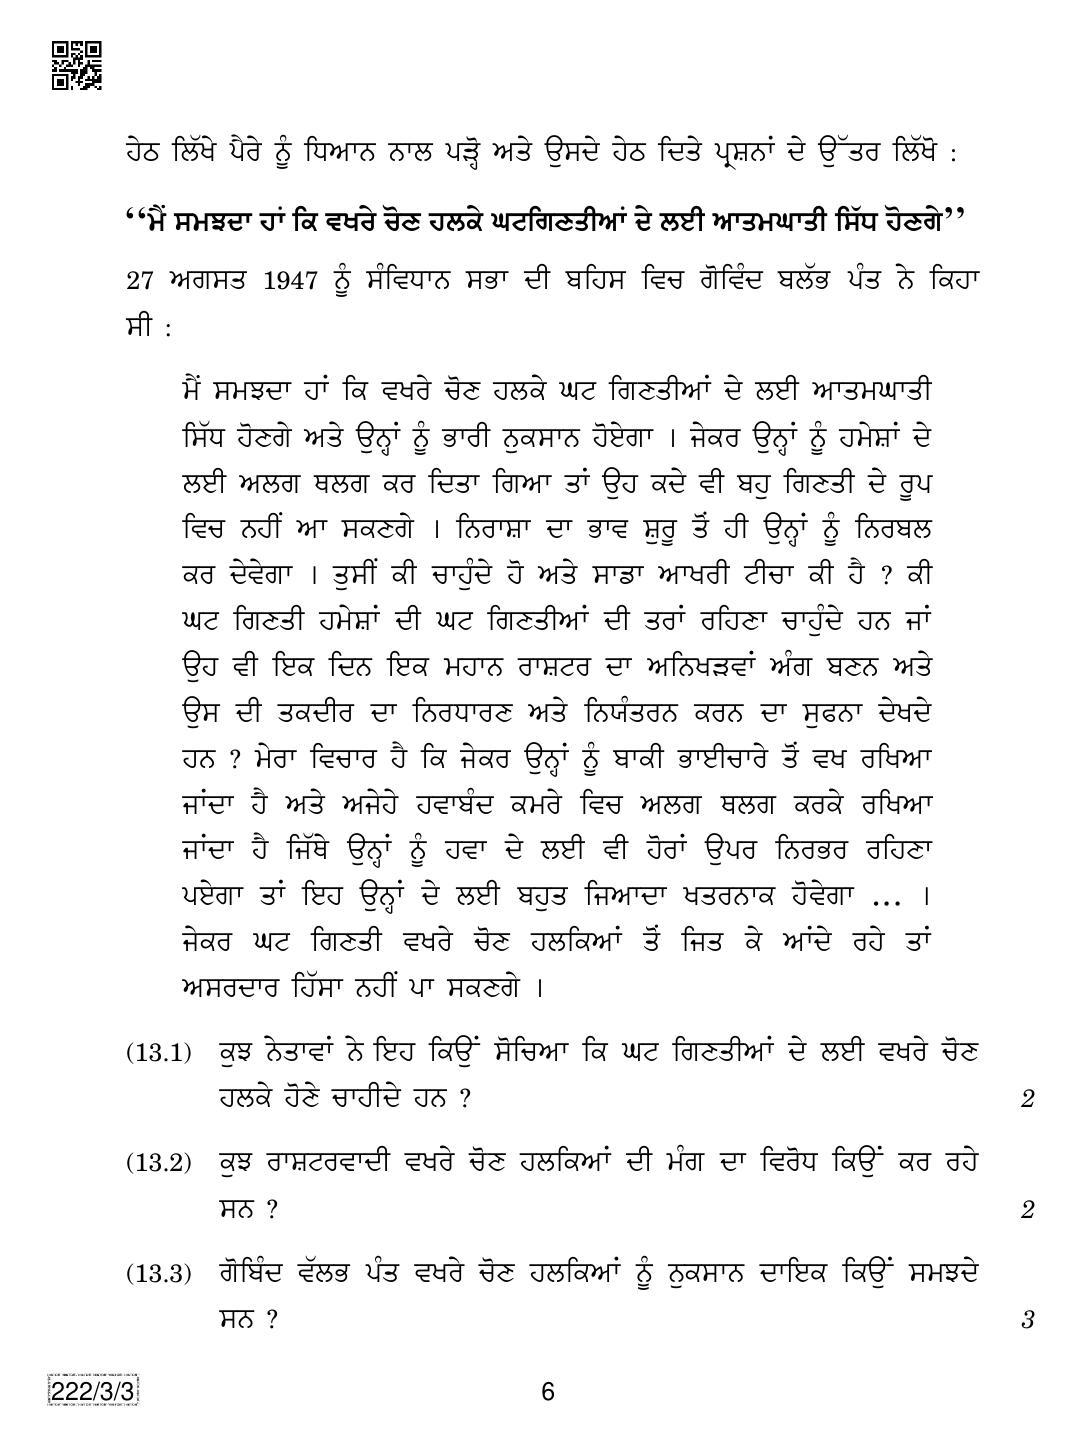 CBSE Class 12 222-3-3 Hiastory (Punjabi) 2019 Question Paper - Page 6